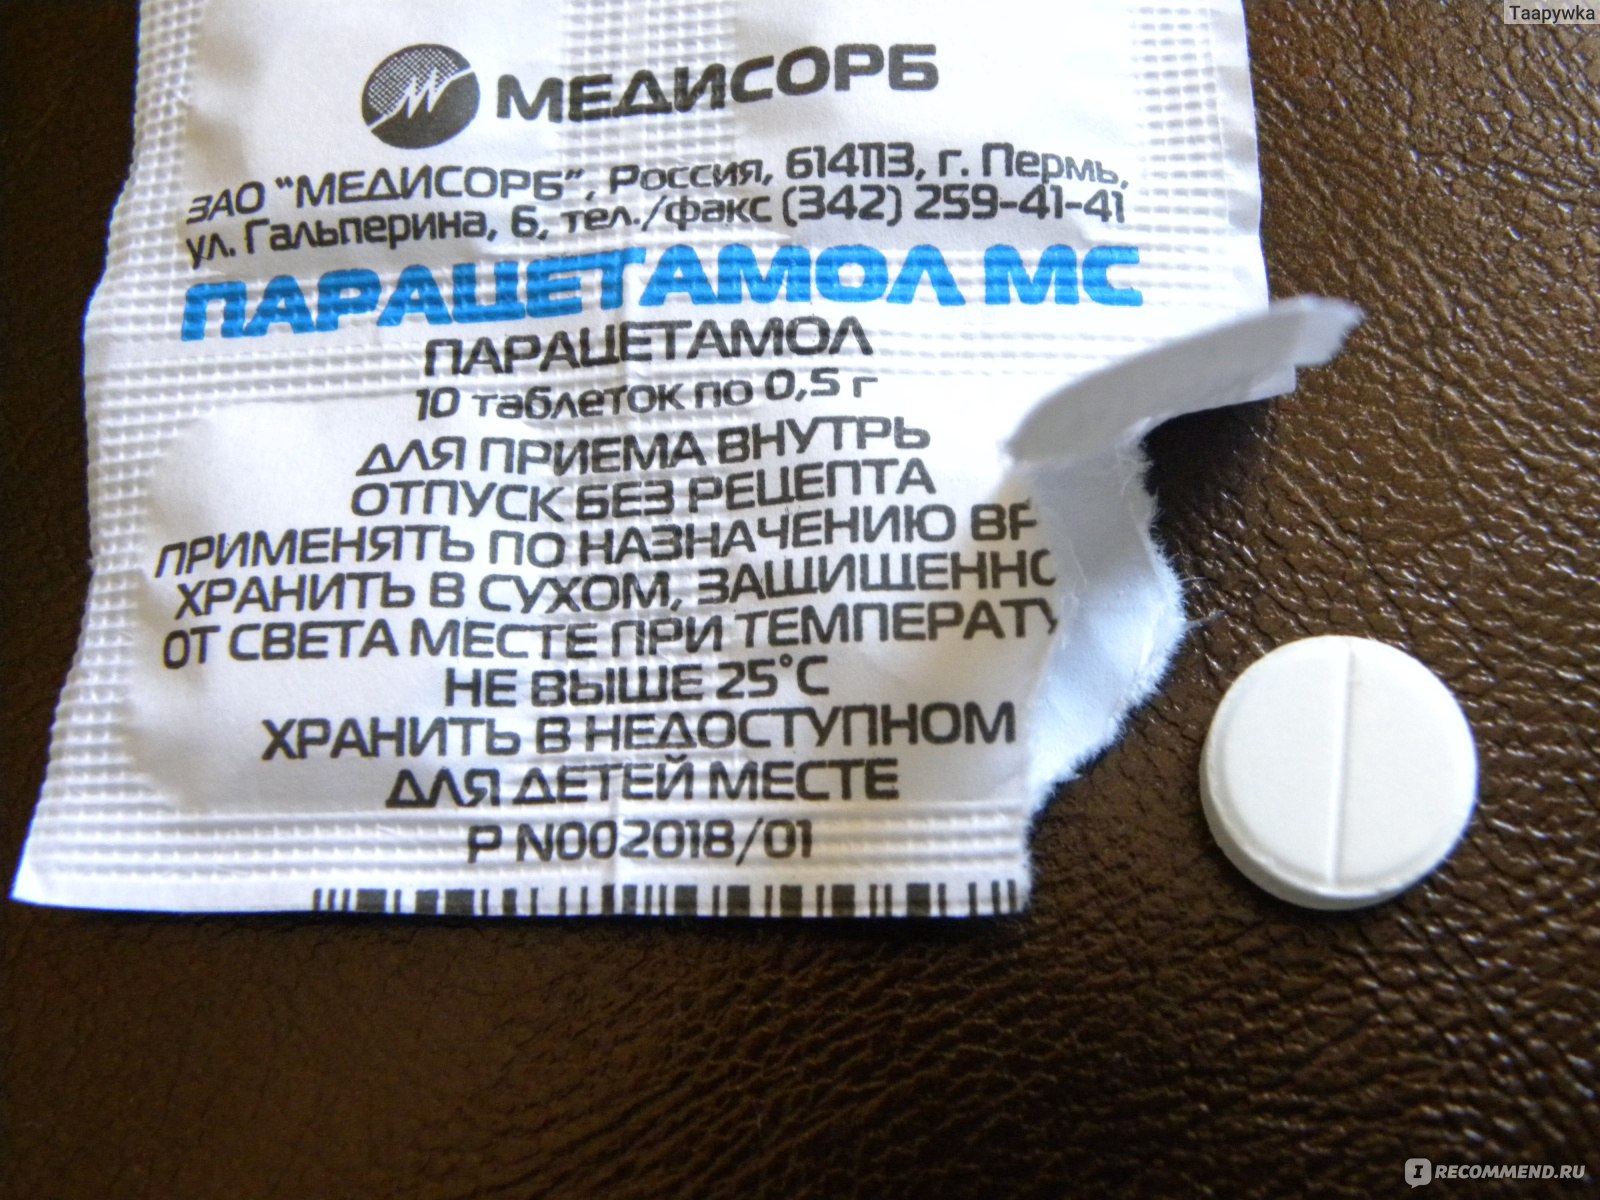 Парацетамол можно от живота. Парацетамол таблетки. Парацетамол детский таблетки. Срок годности парацетамола в таблетках. Срок хранения парацетамола в таблетках.